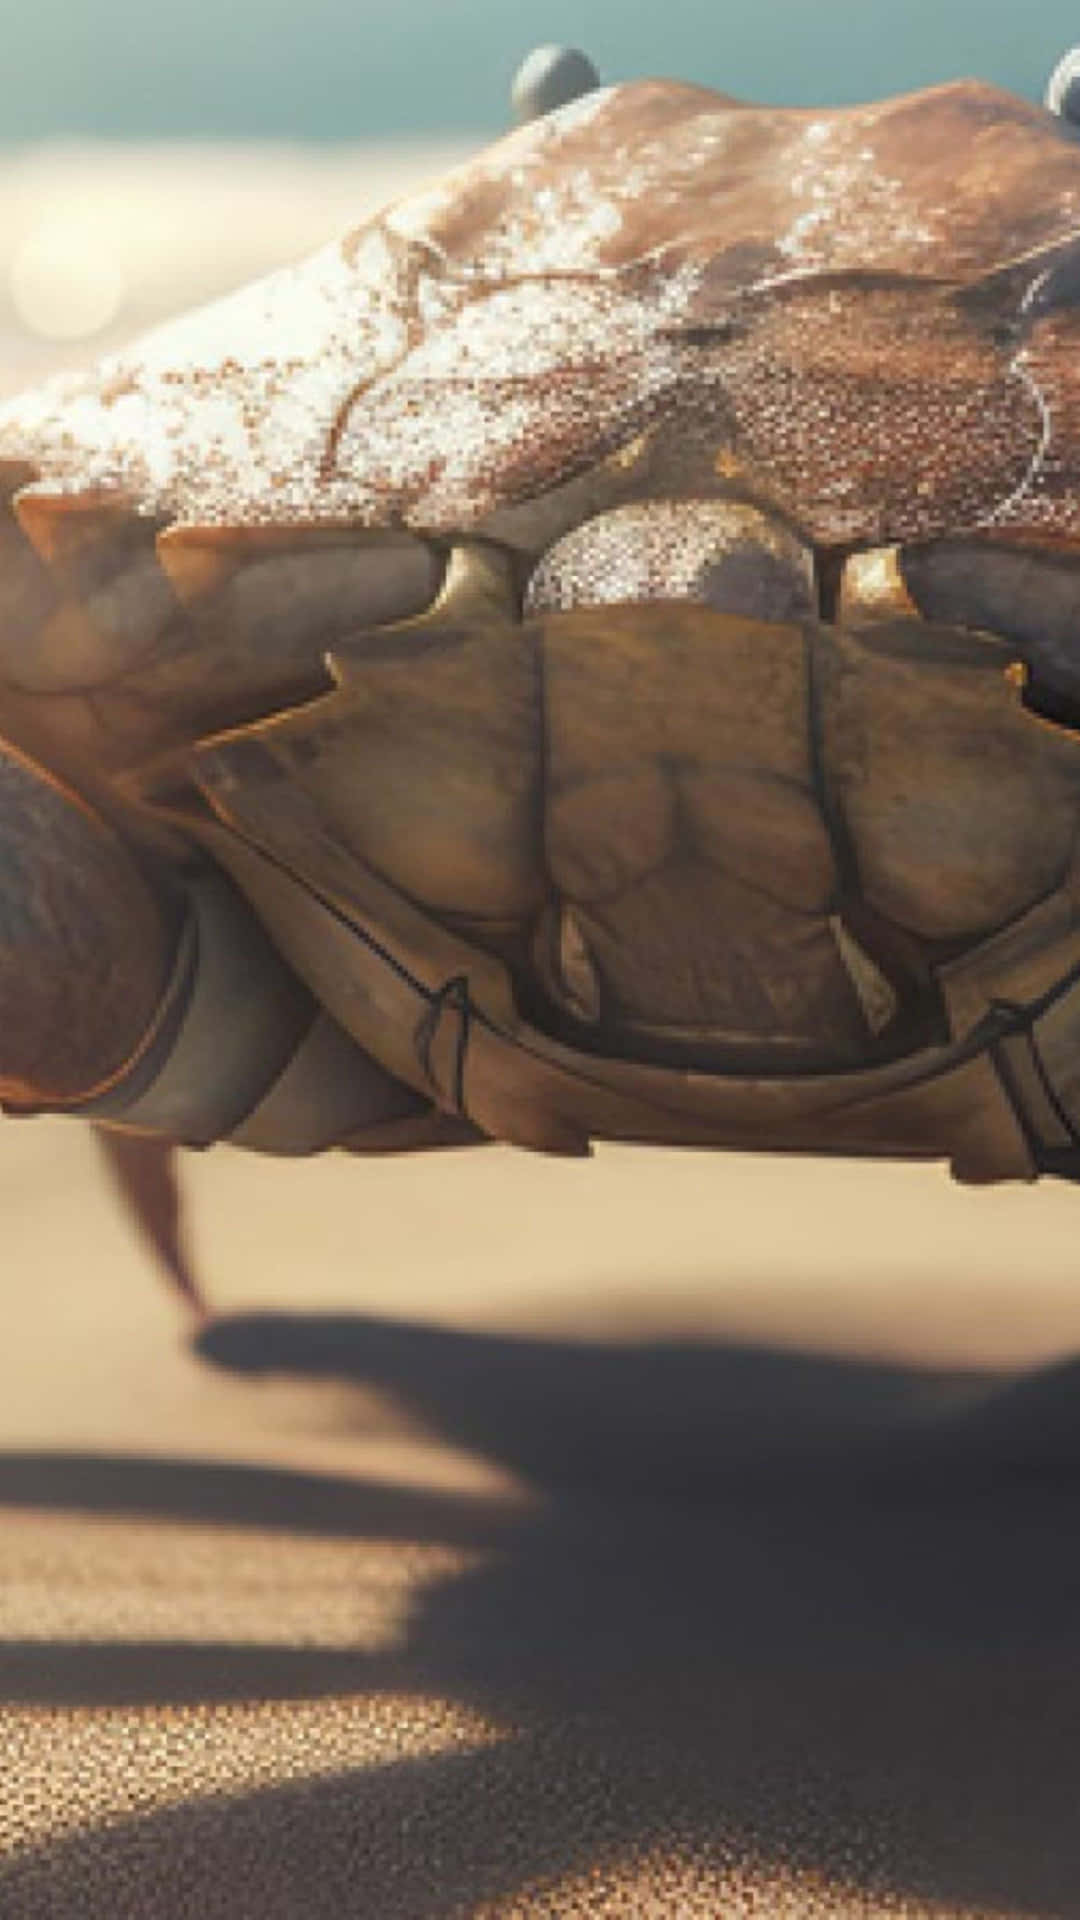 Brown Crab On Sand.jpg Wallpaper